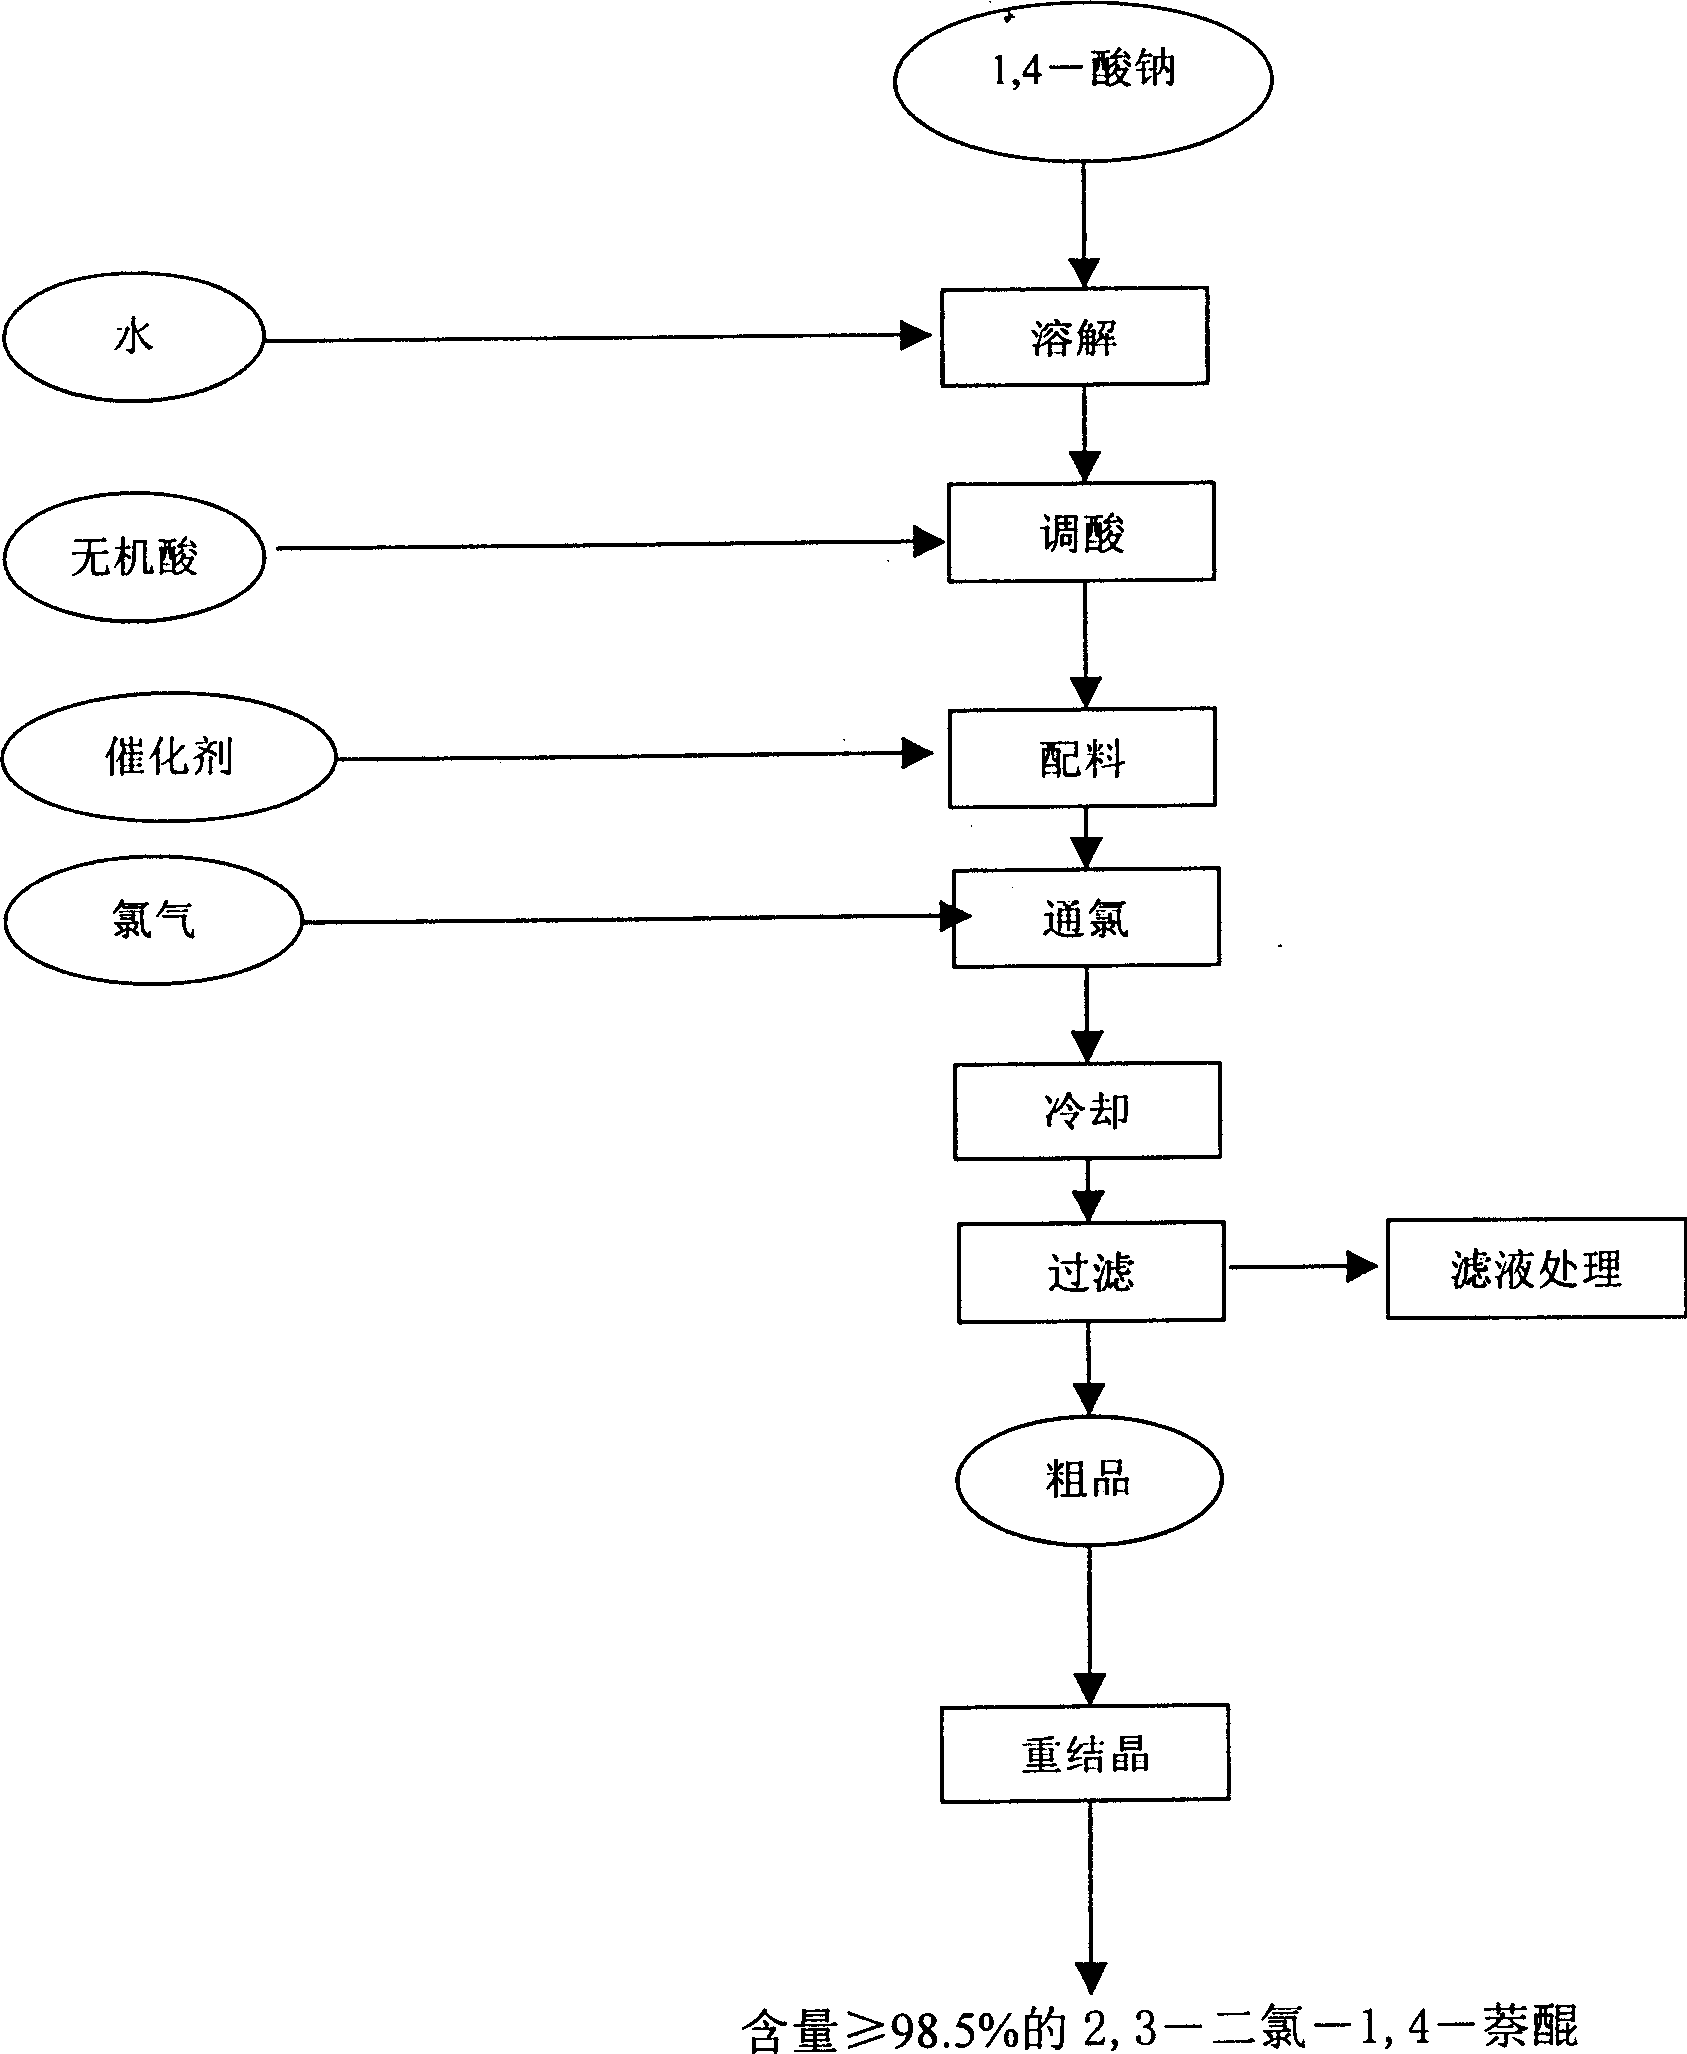 Preparation method of 2,3-dichlor-1,4-naphthaquinones